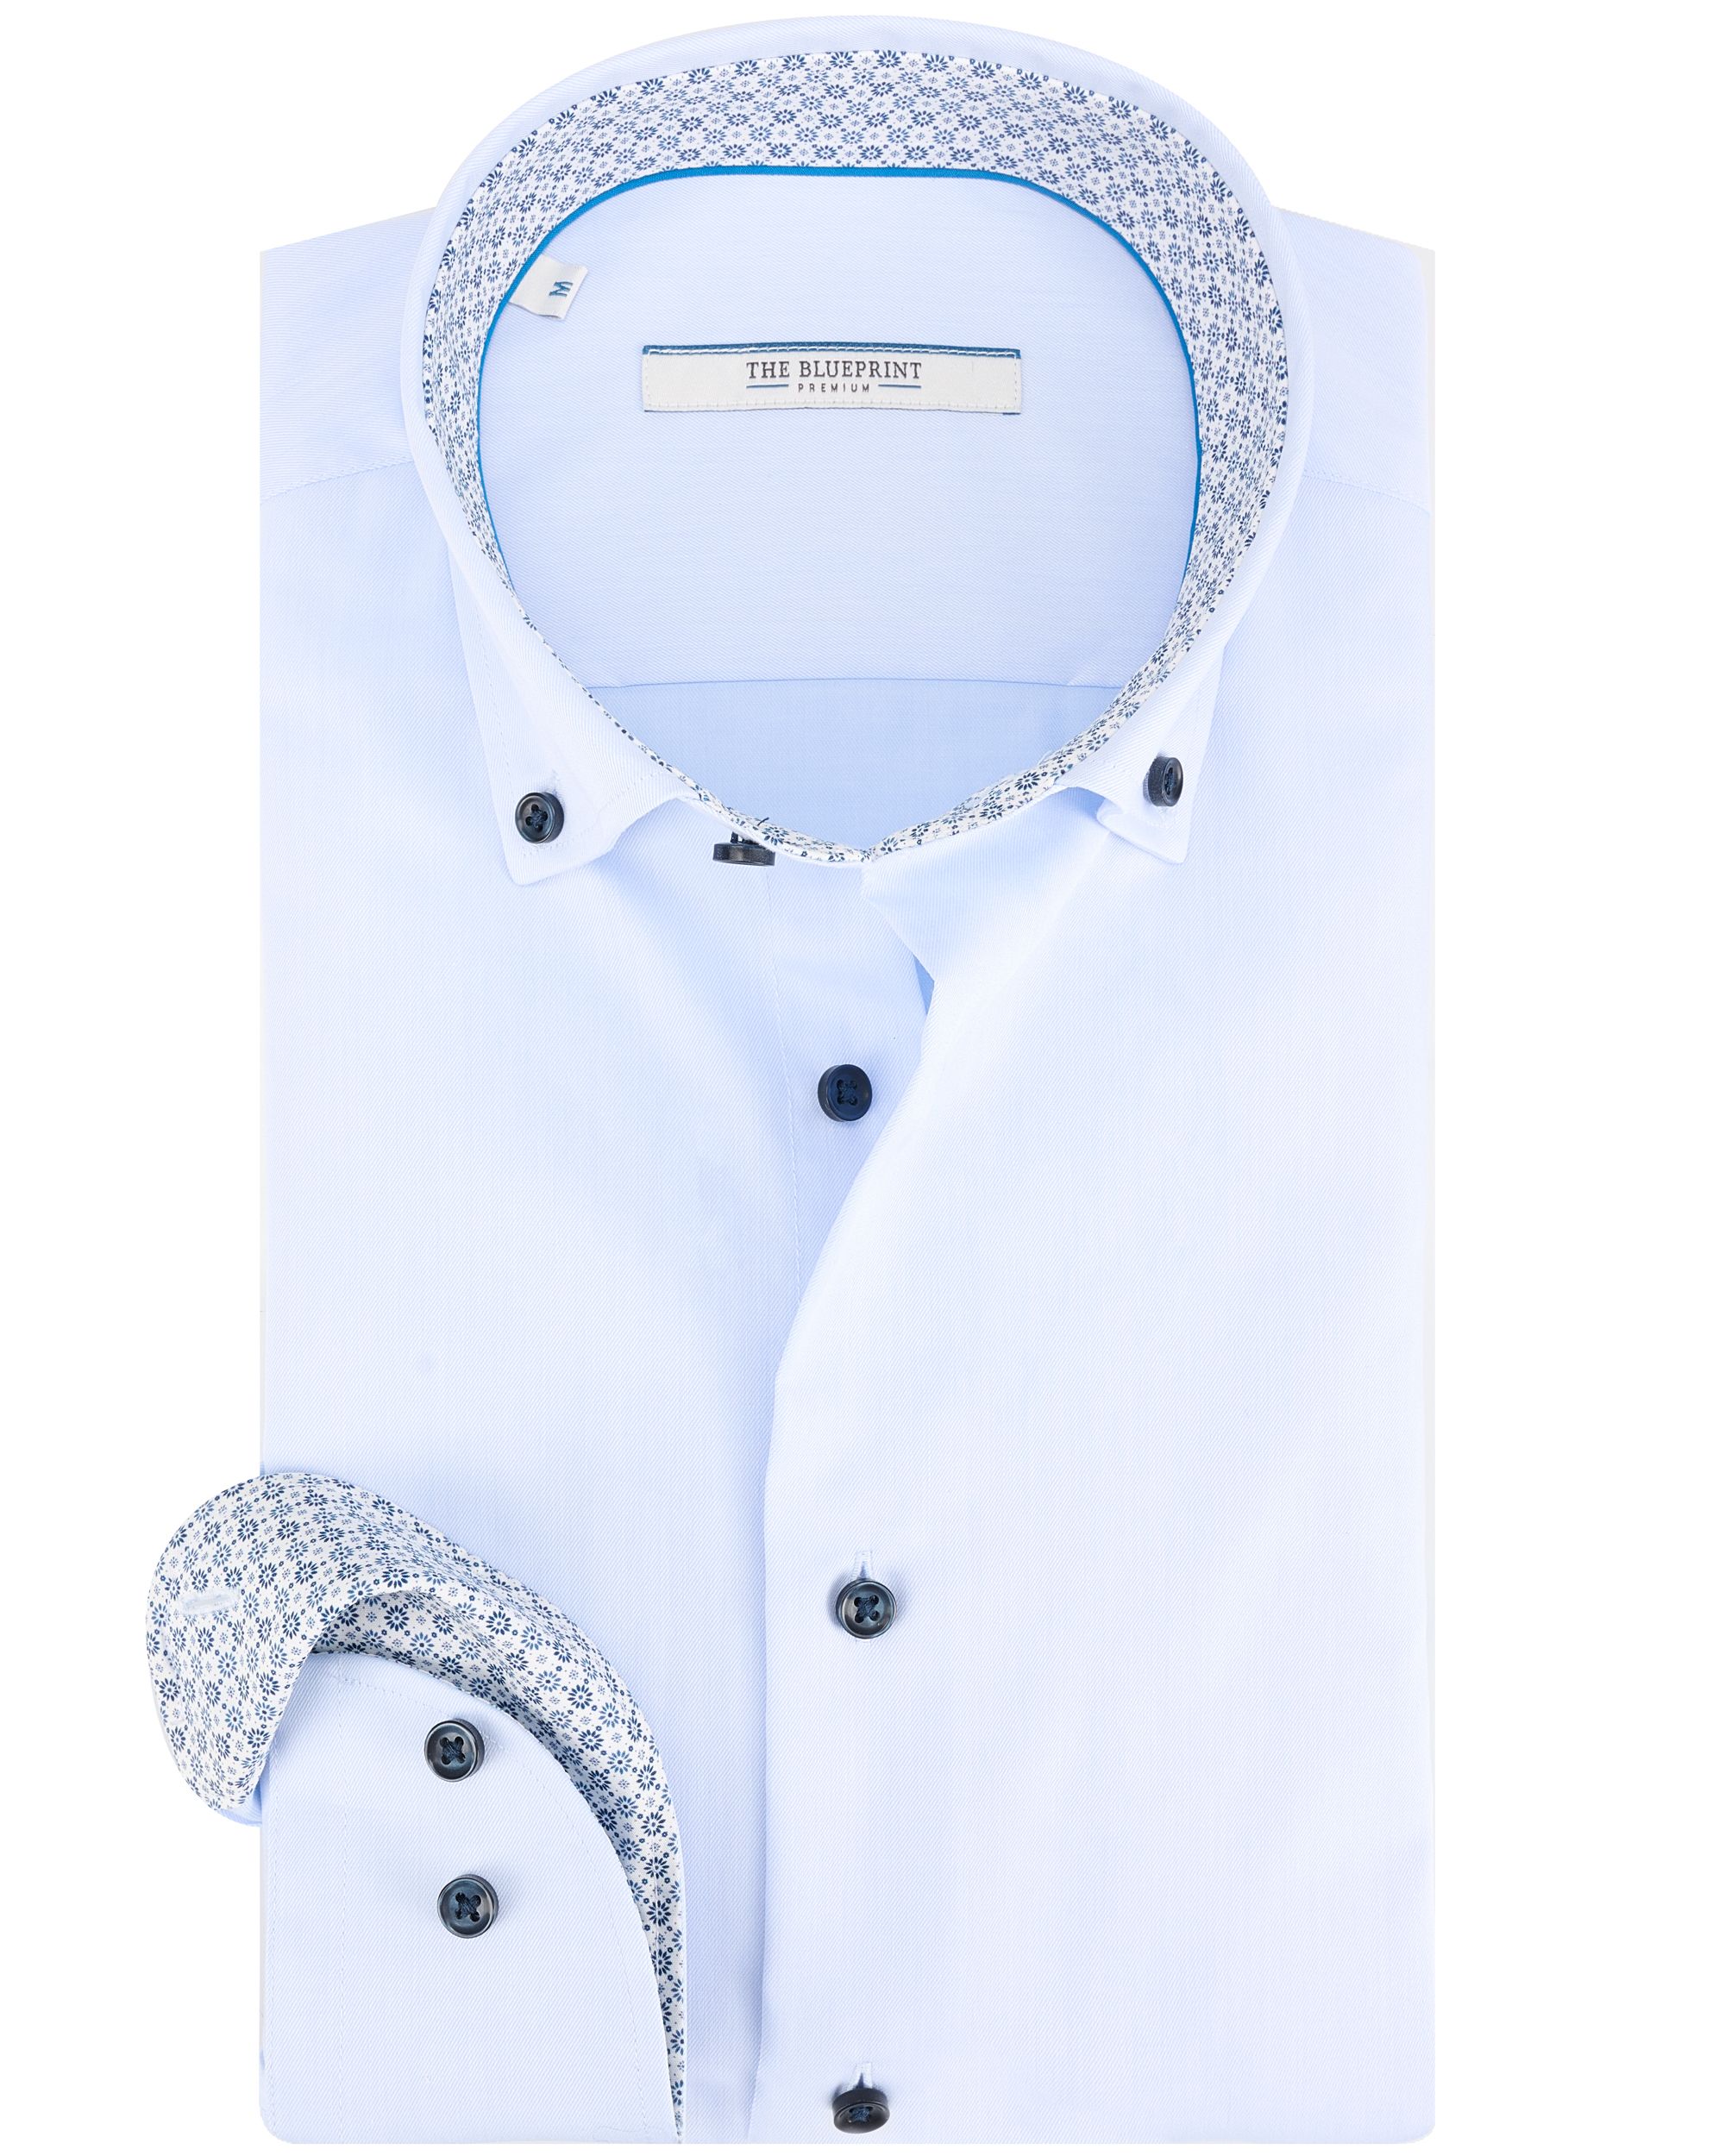 The BLUEPRINT Premium - Trendy Overhemd LM Lichtblauw uni 094226-001-L